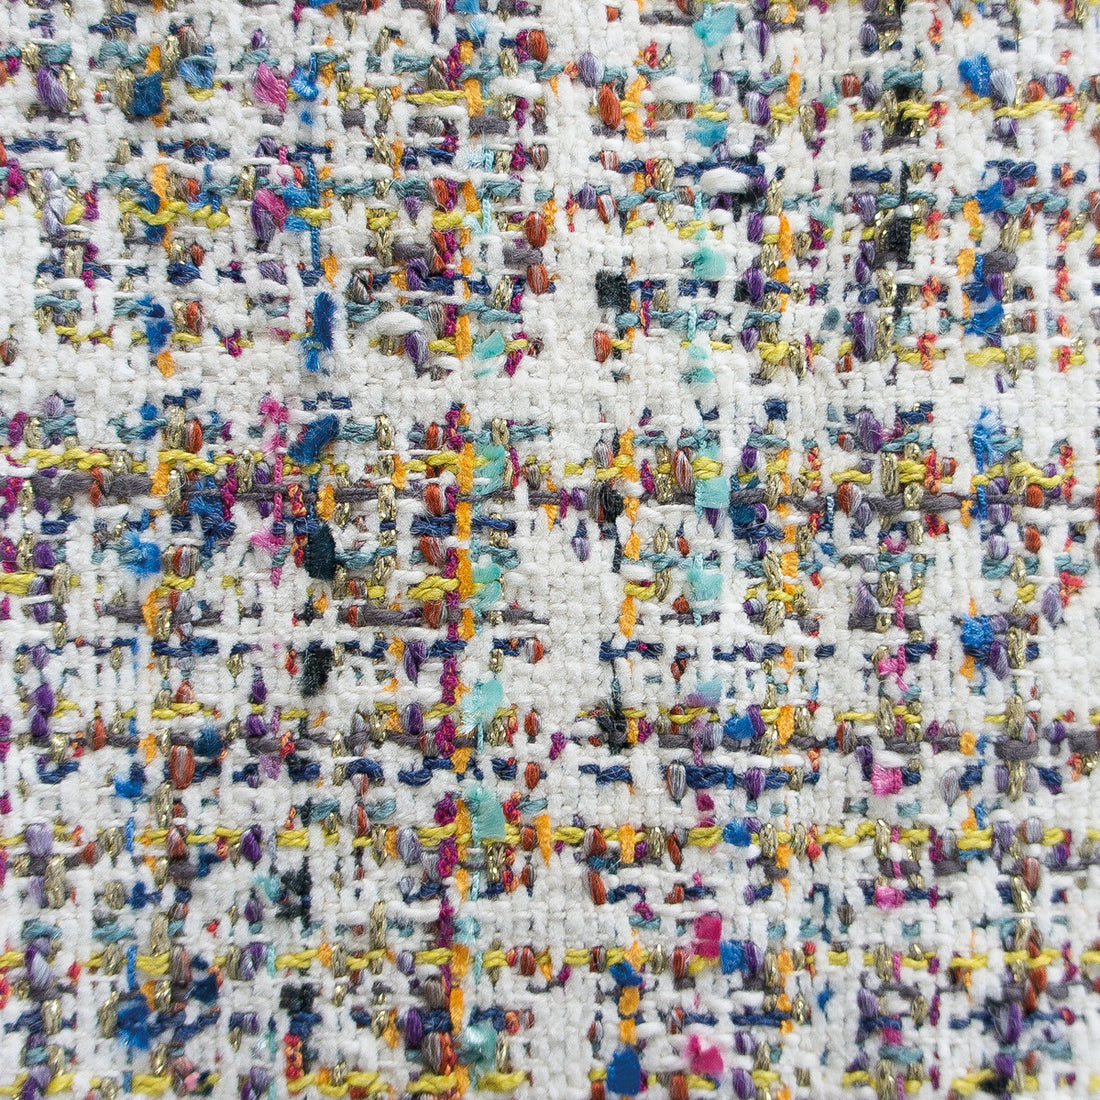 Tuch fabric in blanco color - pattern GDT5590.002.0 - by Gaston y Daniela in the Gaston Nuevo Mundo collection